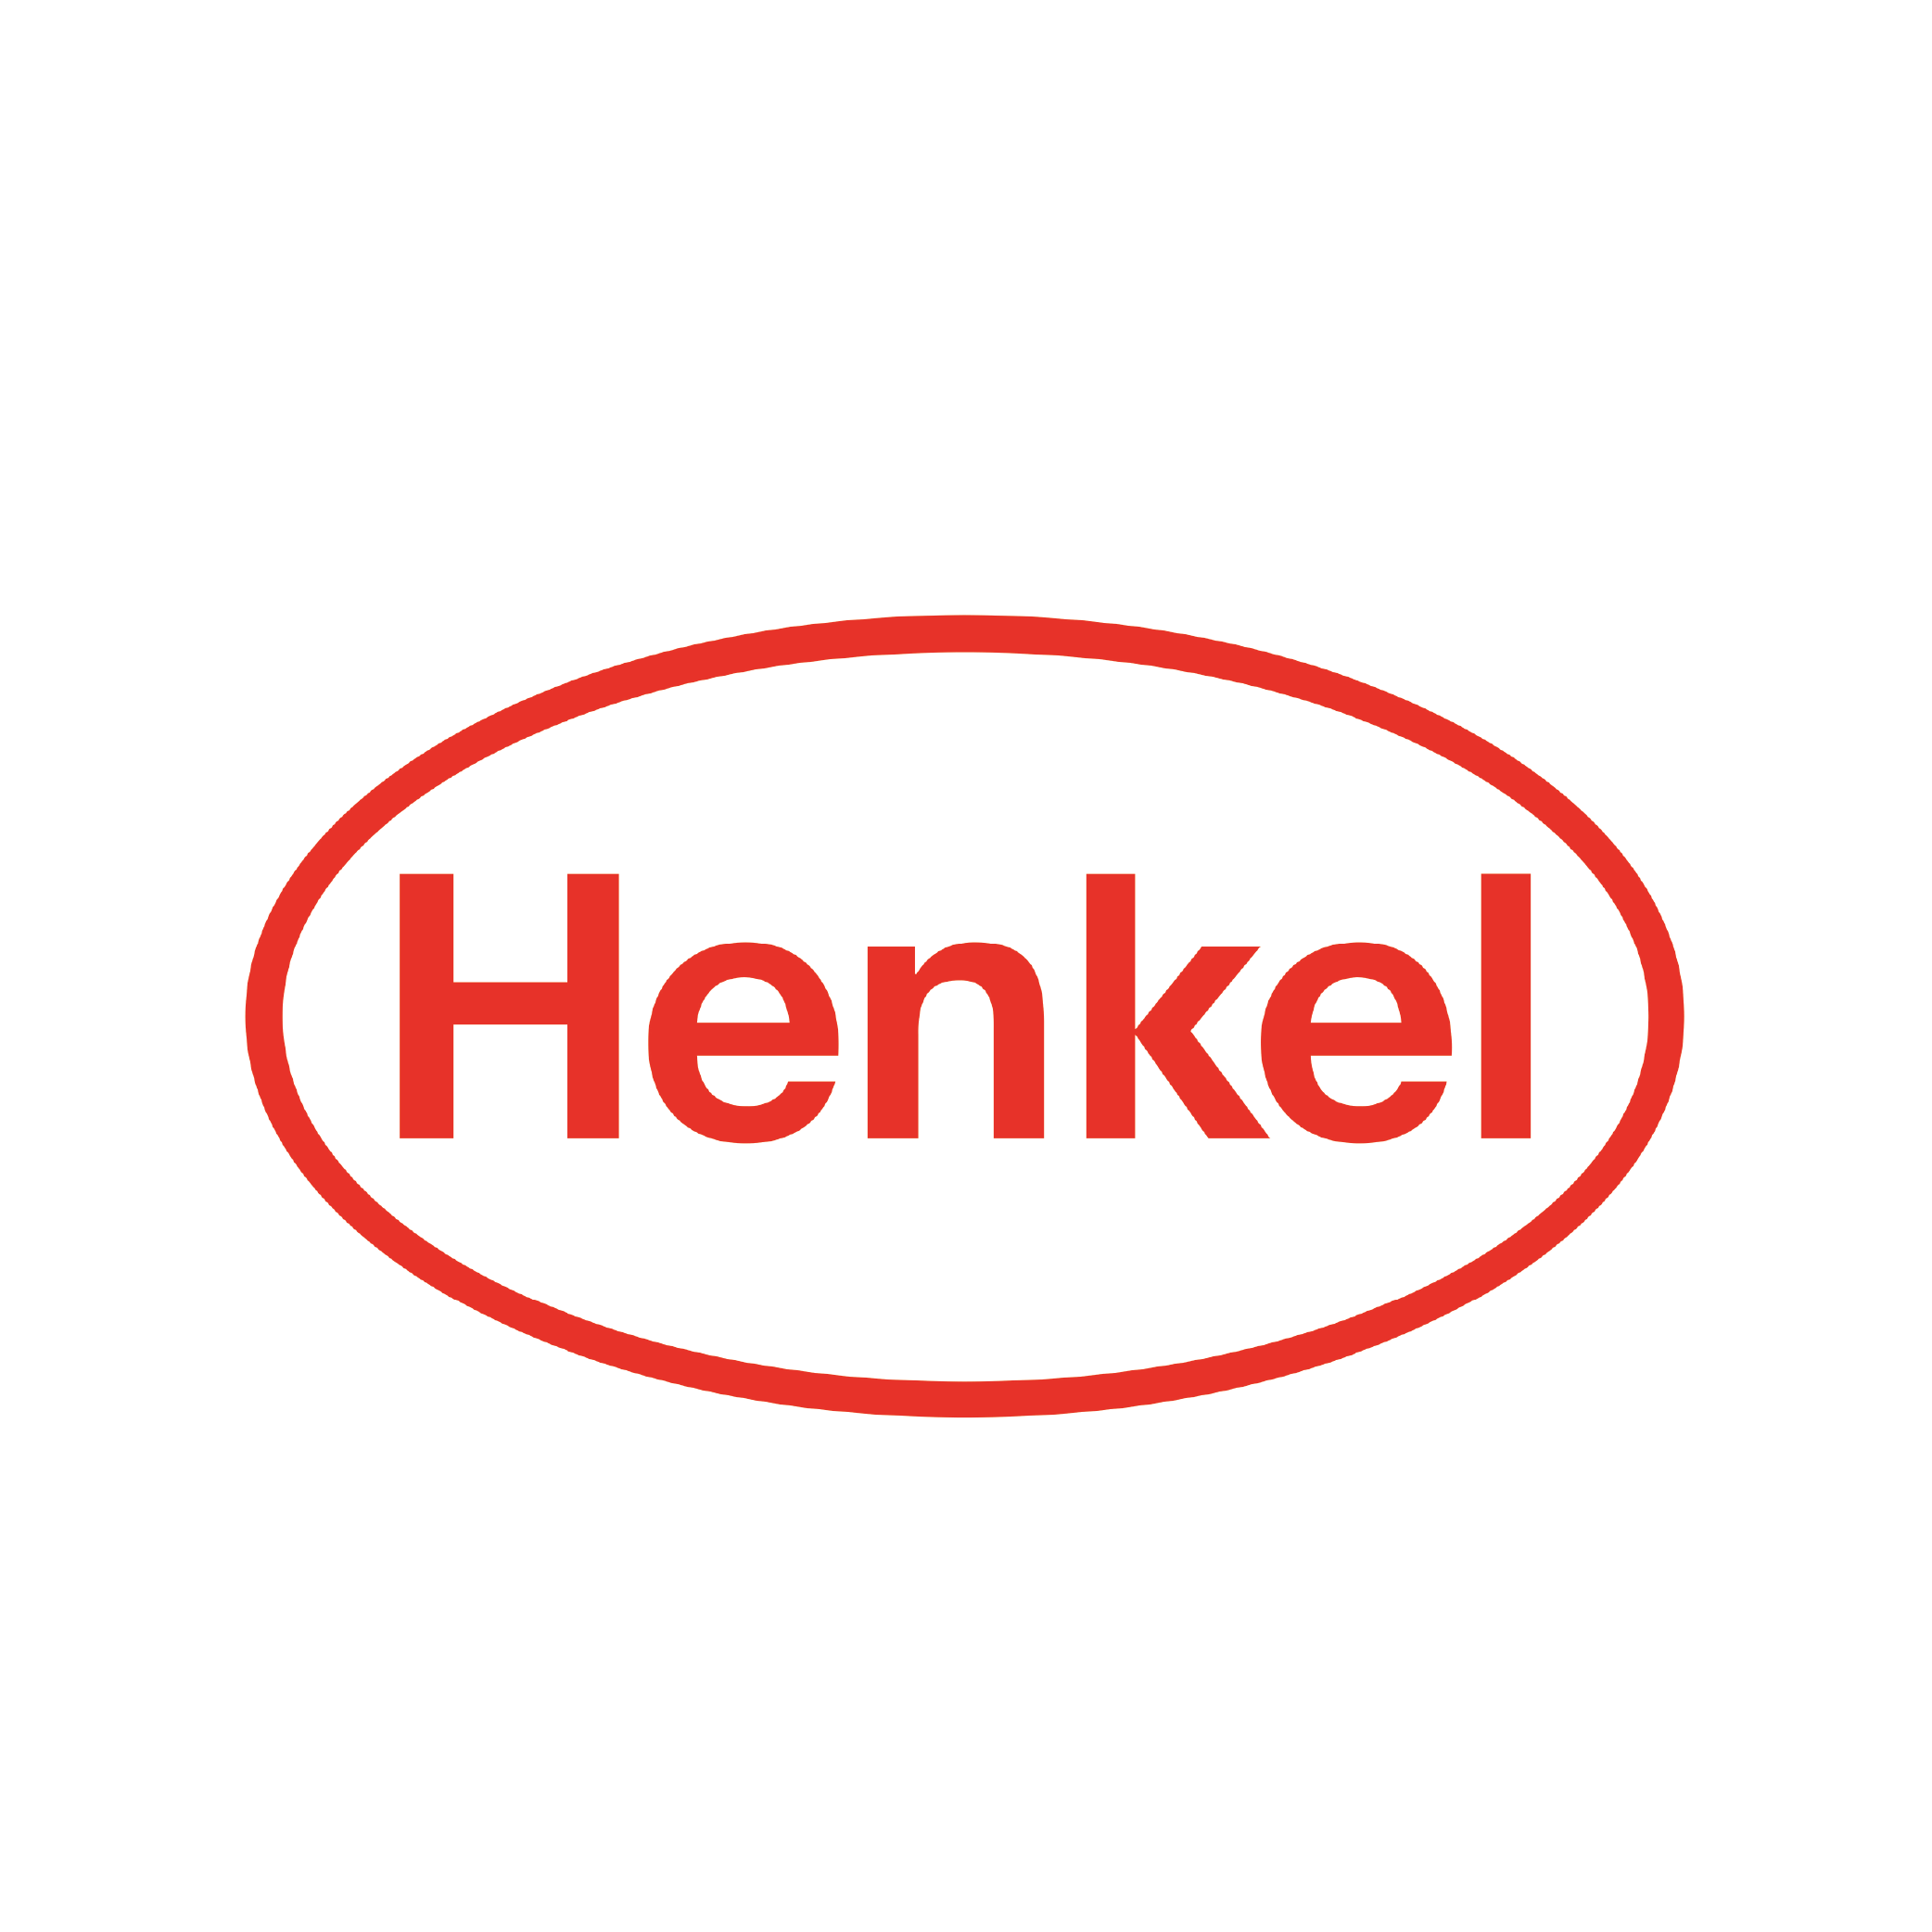 Henkel logo - SEC Newgate